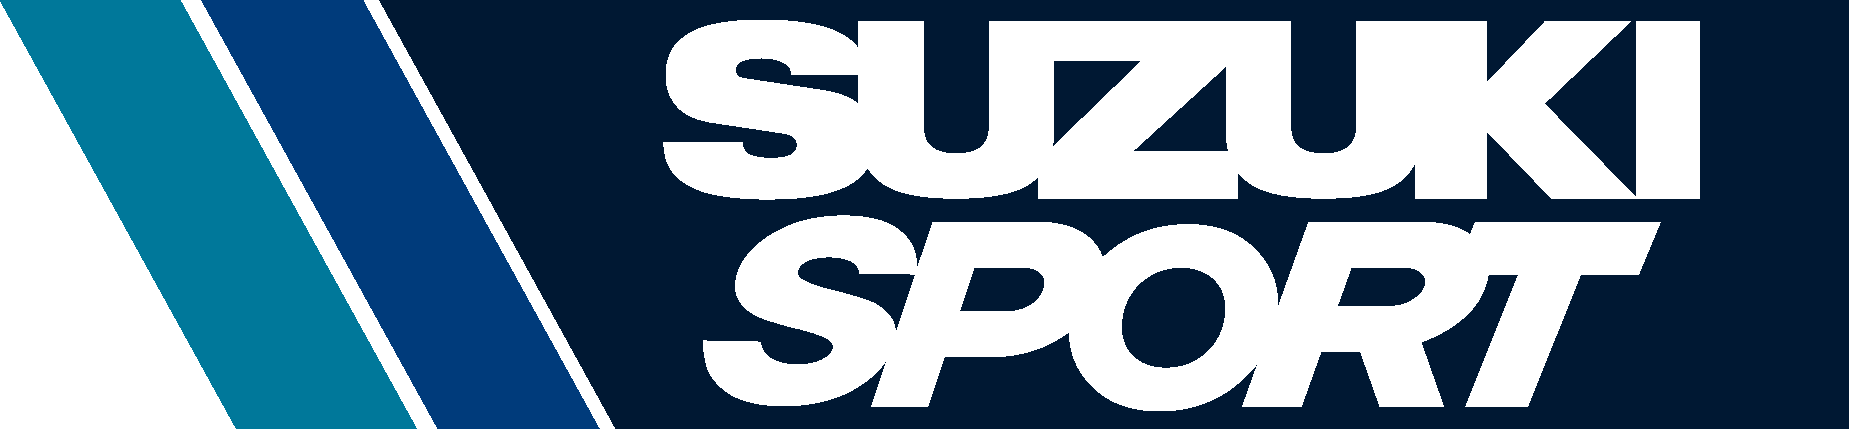 Suzuki logo icon in vector .EPS, .AI, .SVG formats 